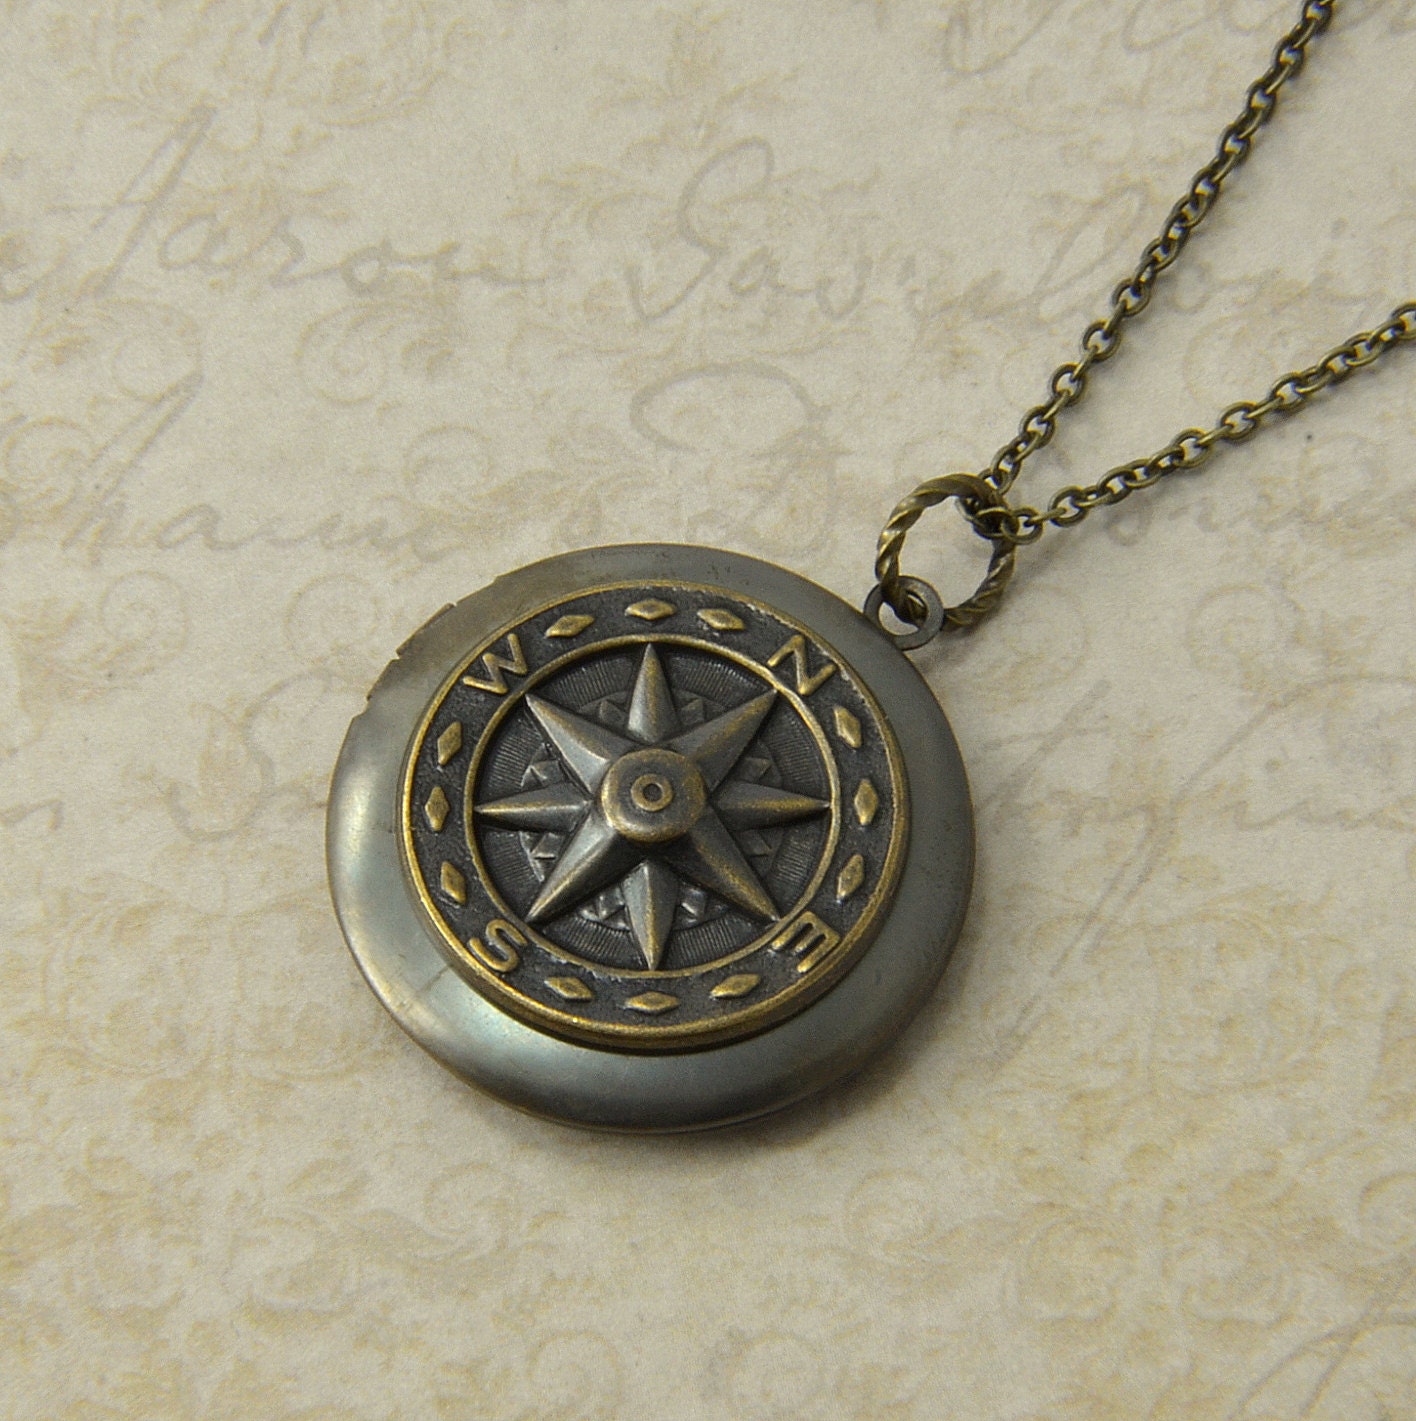 locket necklace - compass necklace - antiqued brass vintage style compass locket necklace jewelry for women